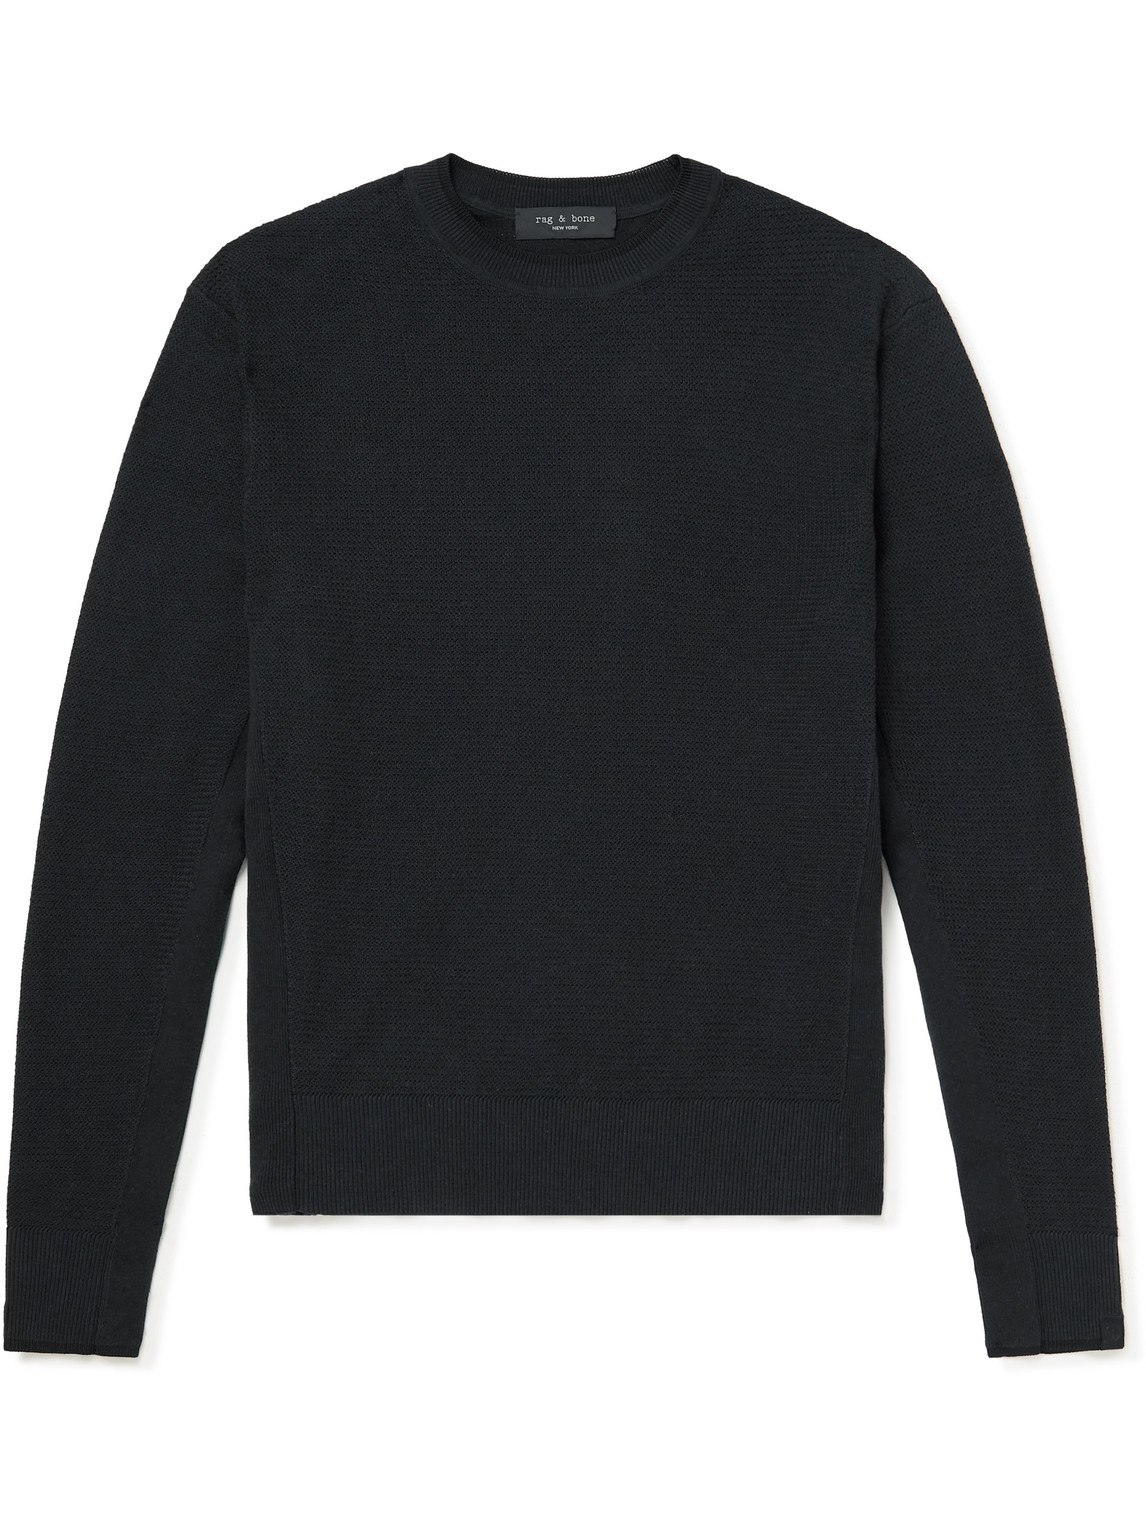 Slim-Fit Cotton-Blend Sweater